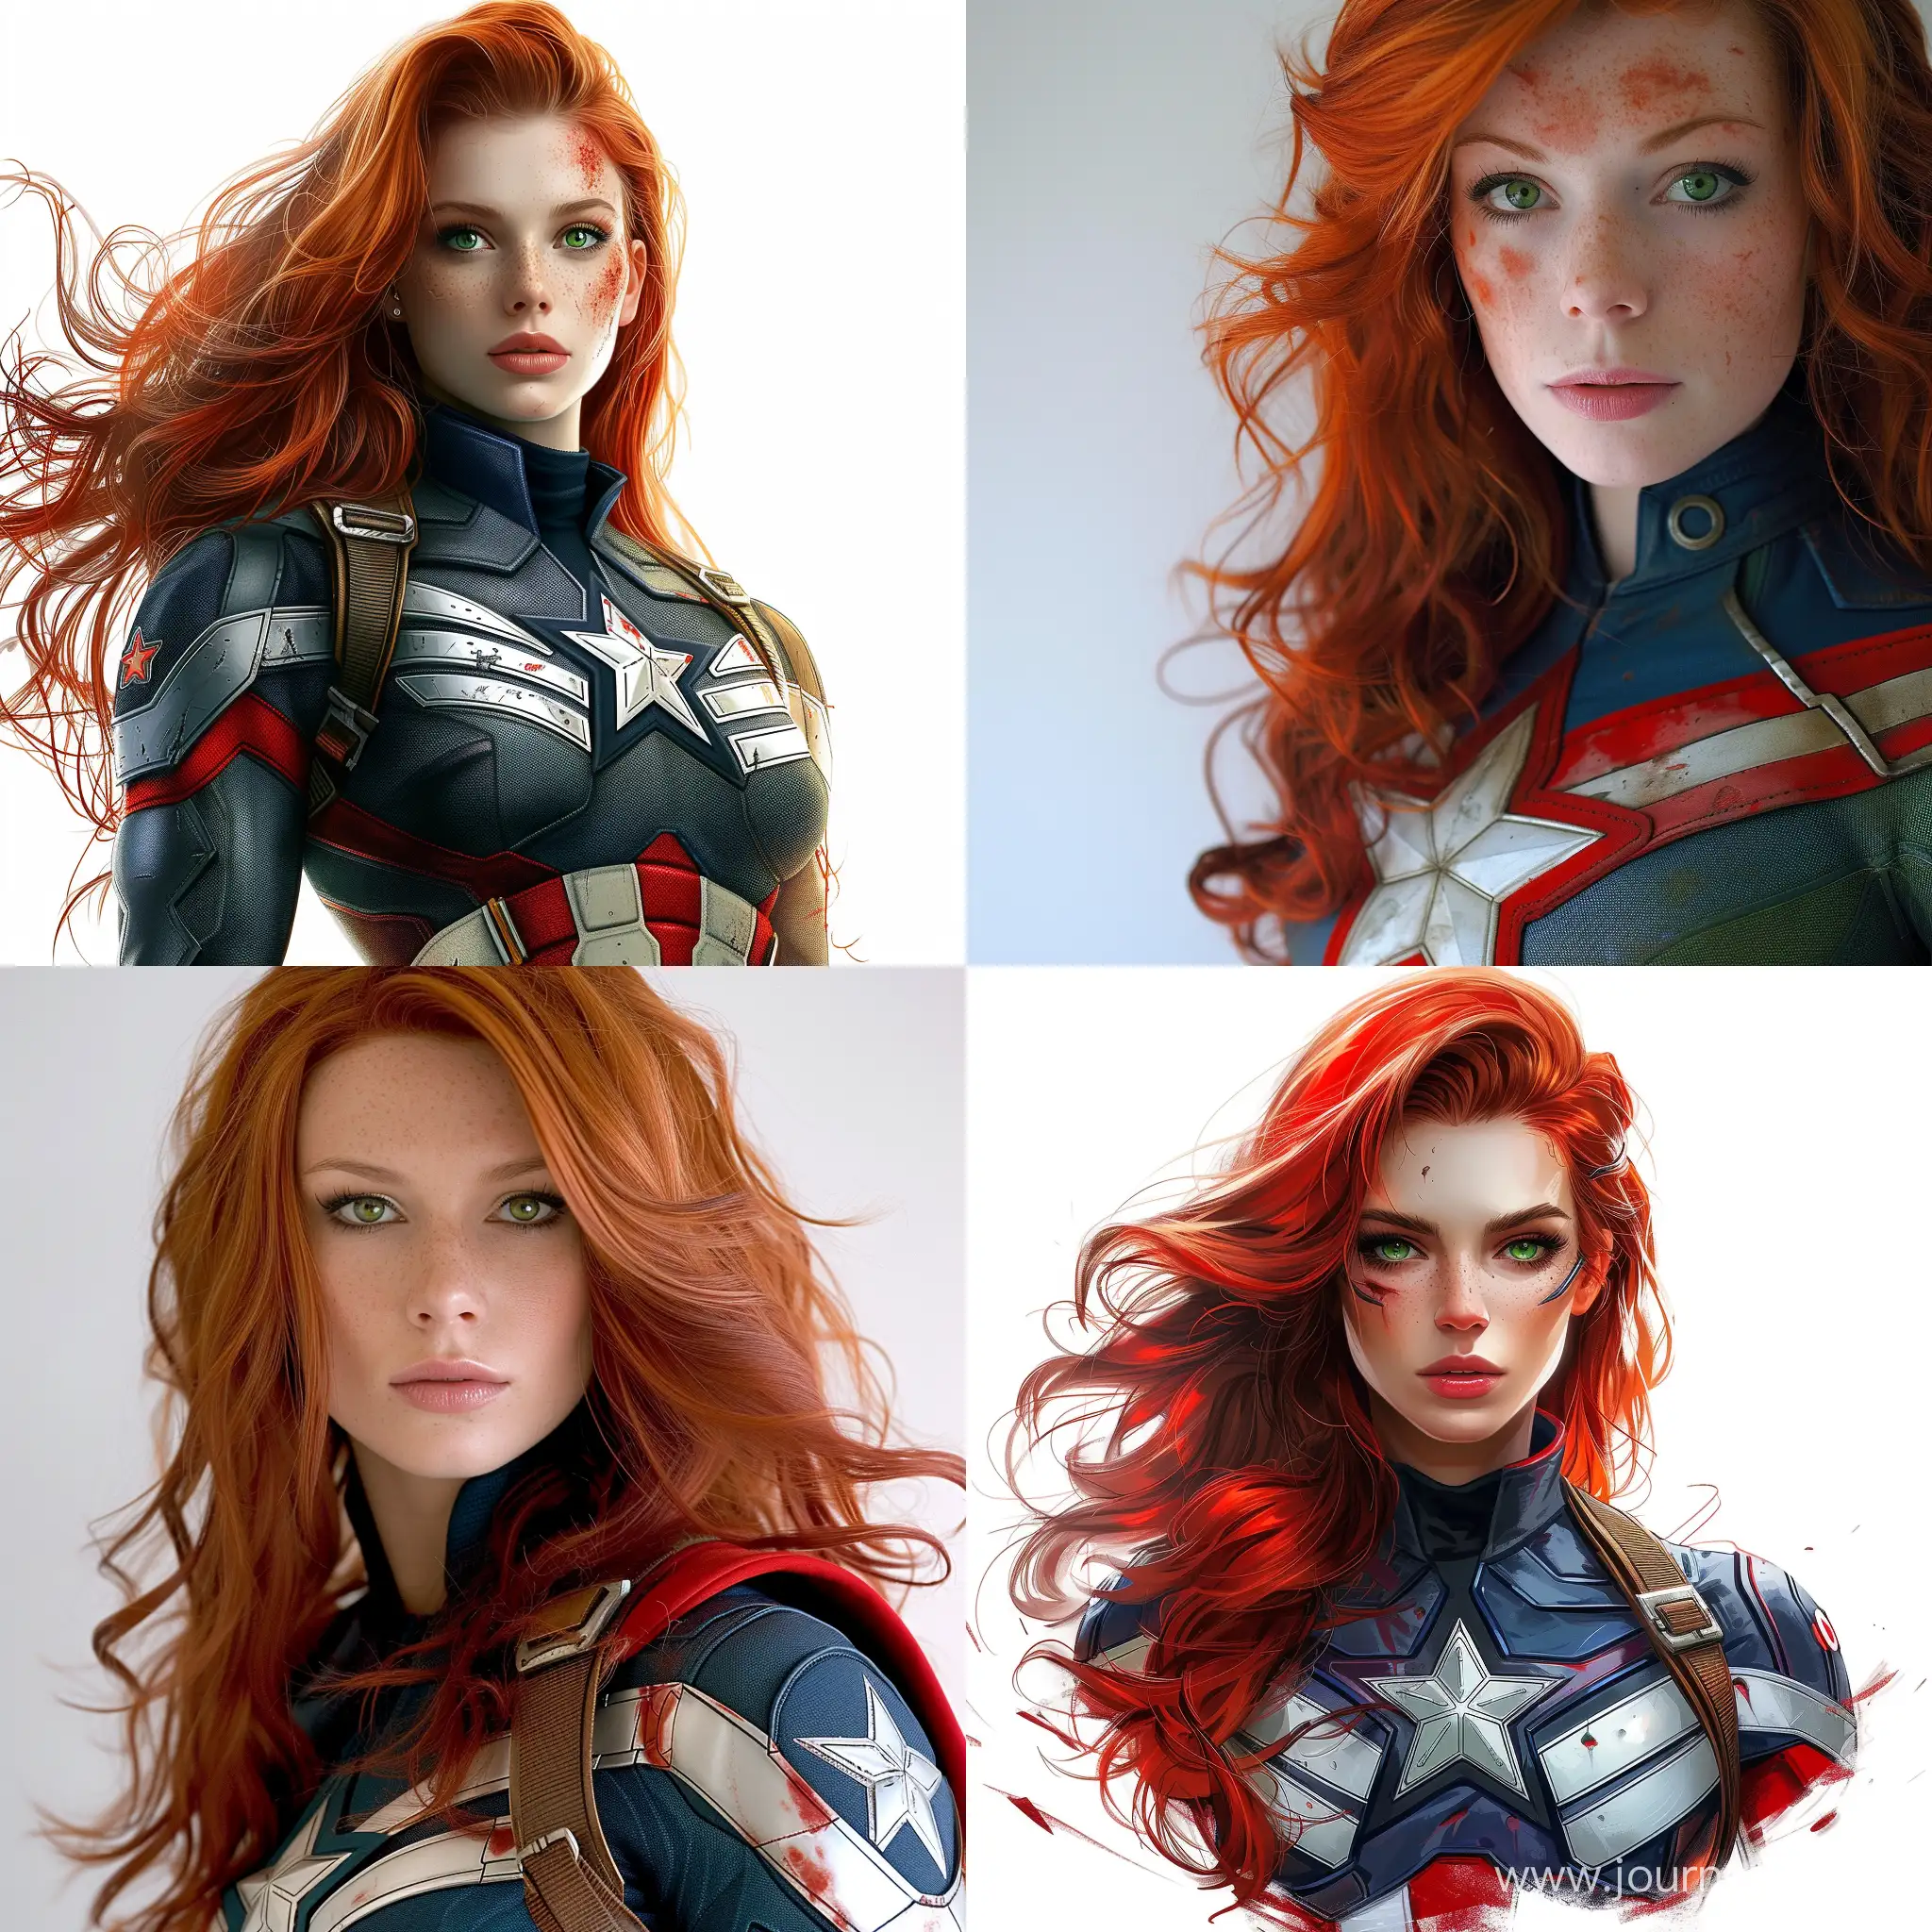 Sensual-Female-Superhero-in-Captain-America-Costume-on-White-Background